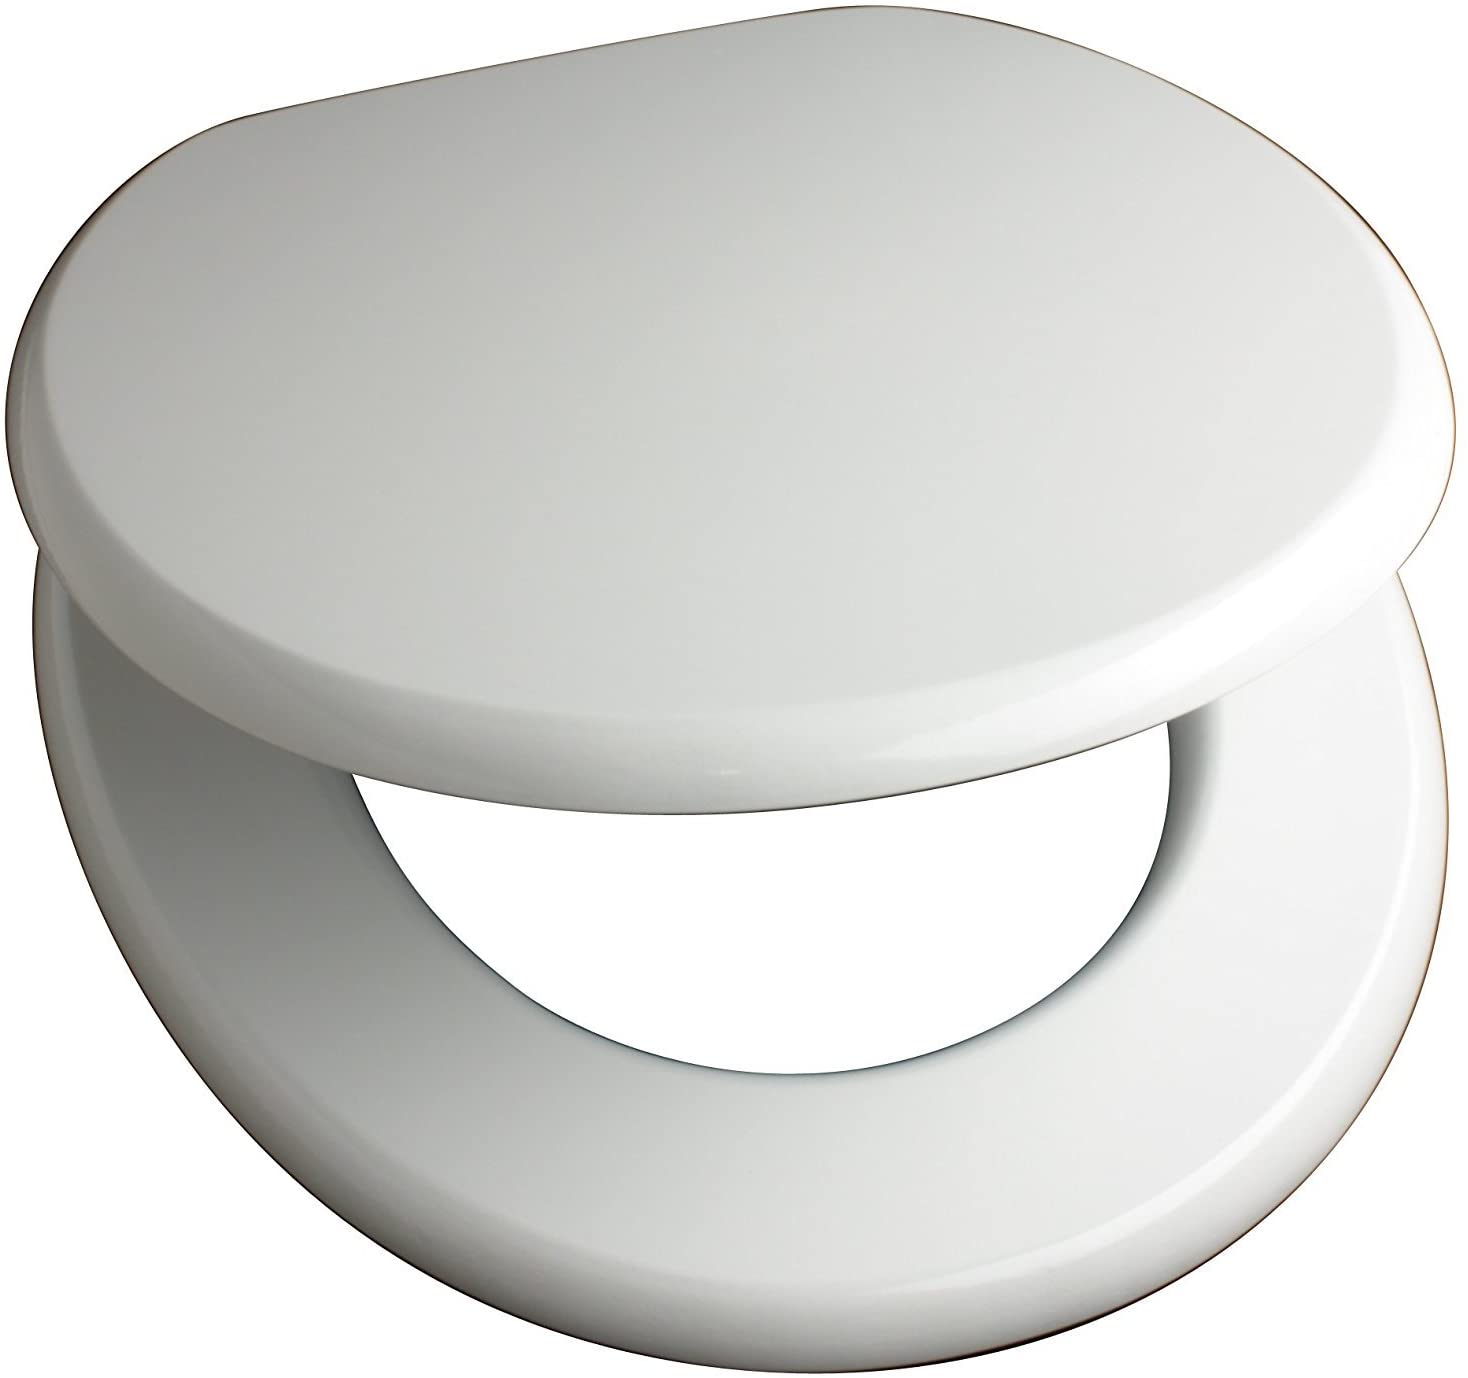 Euroshowers MDF antibacterial toilet seat - White